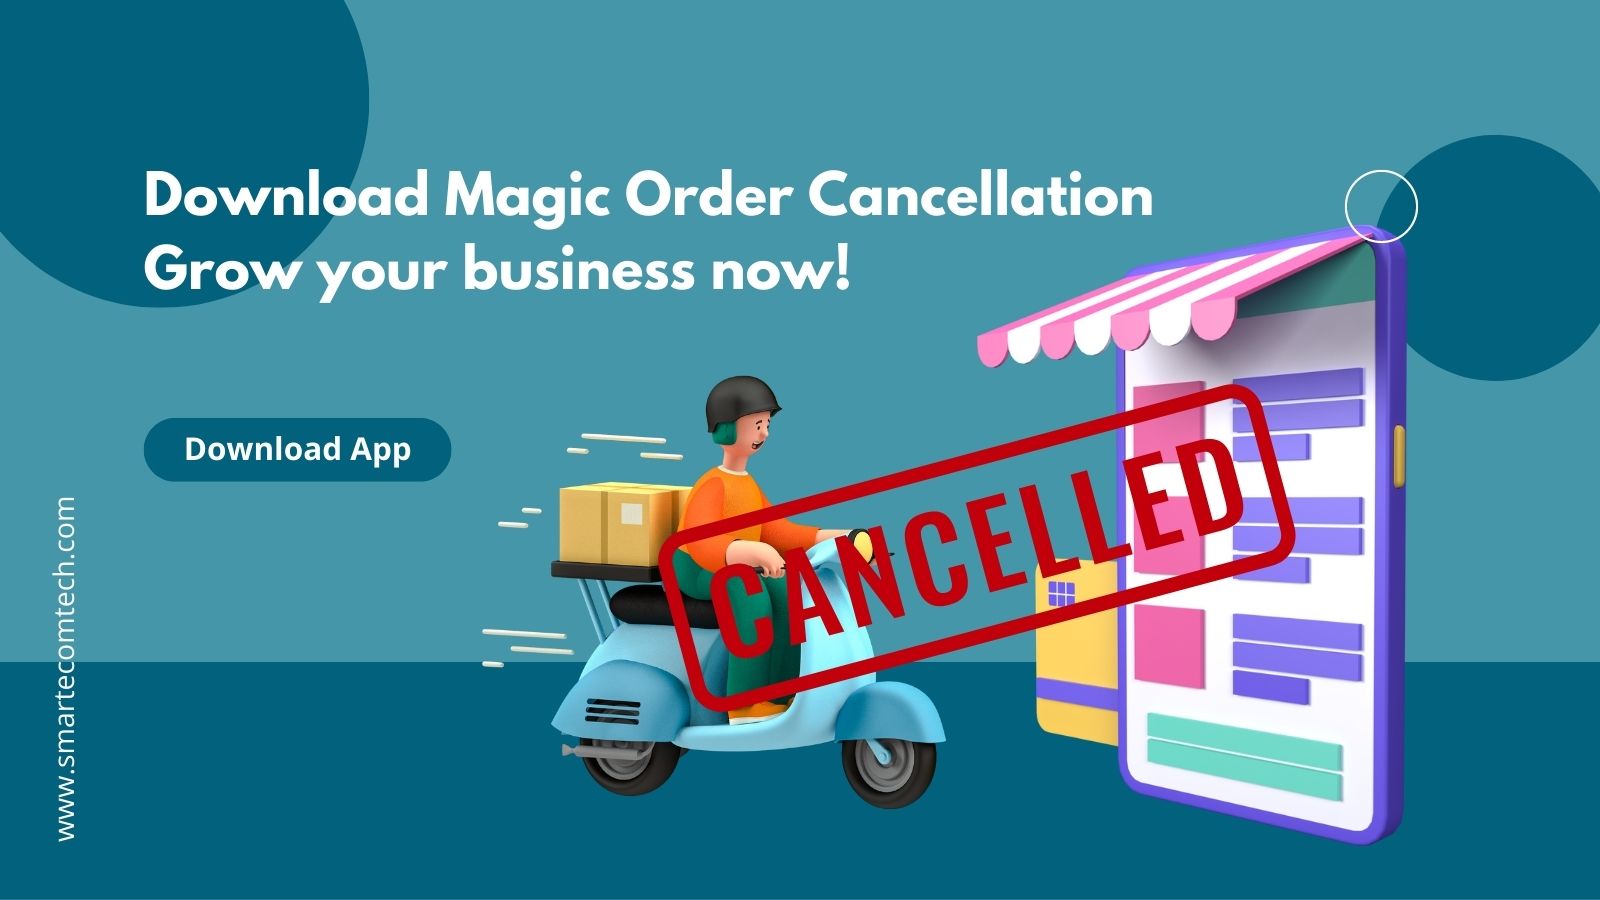 Magic order cancellation